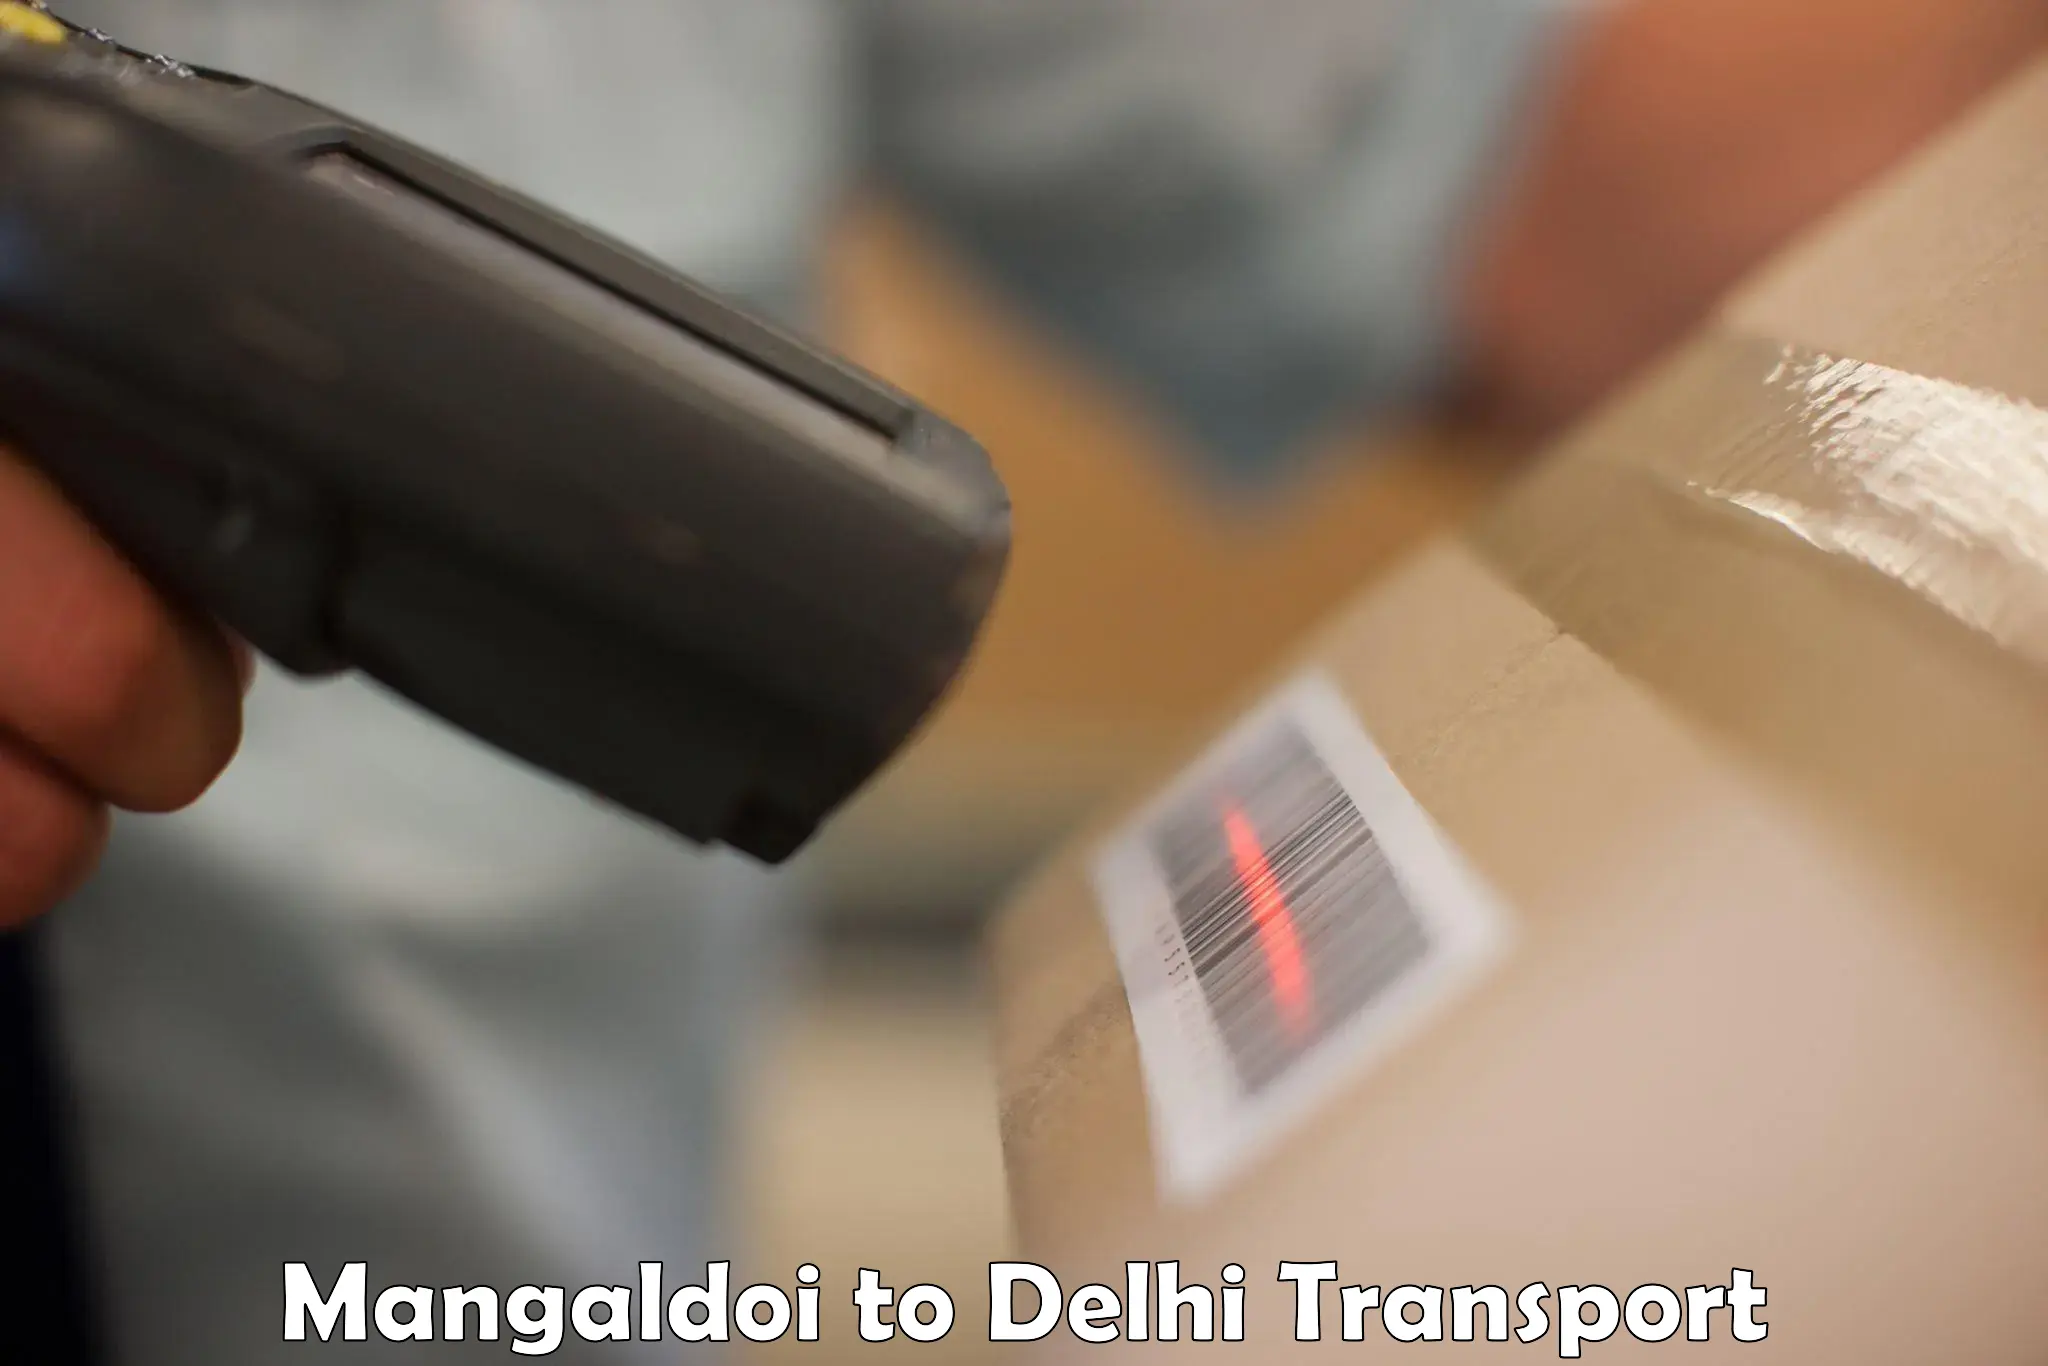 Sending bike to another city Mangaldoi to University of Delhi